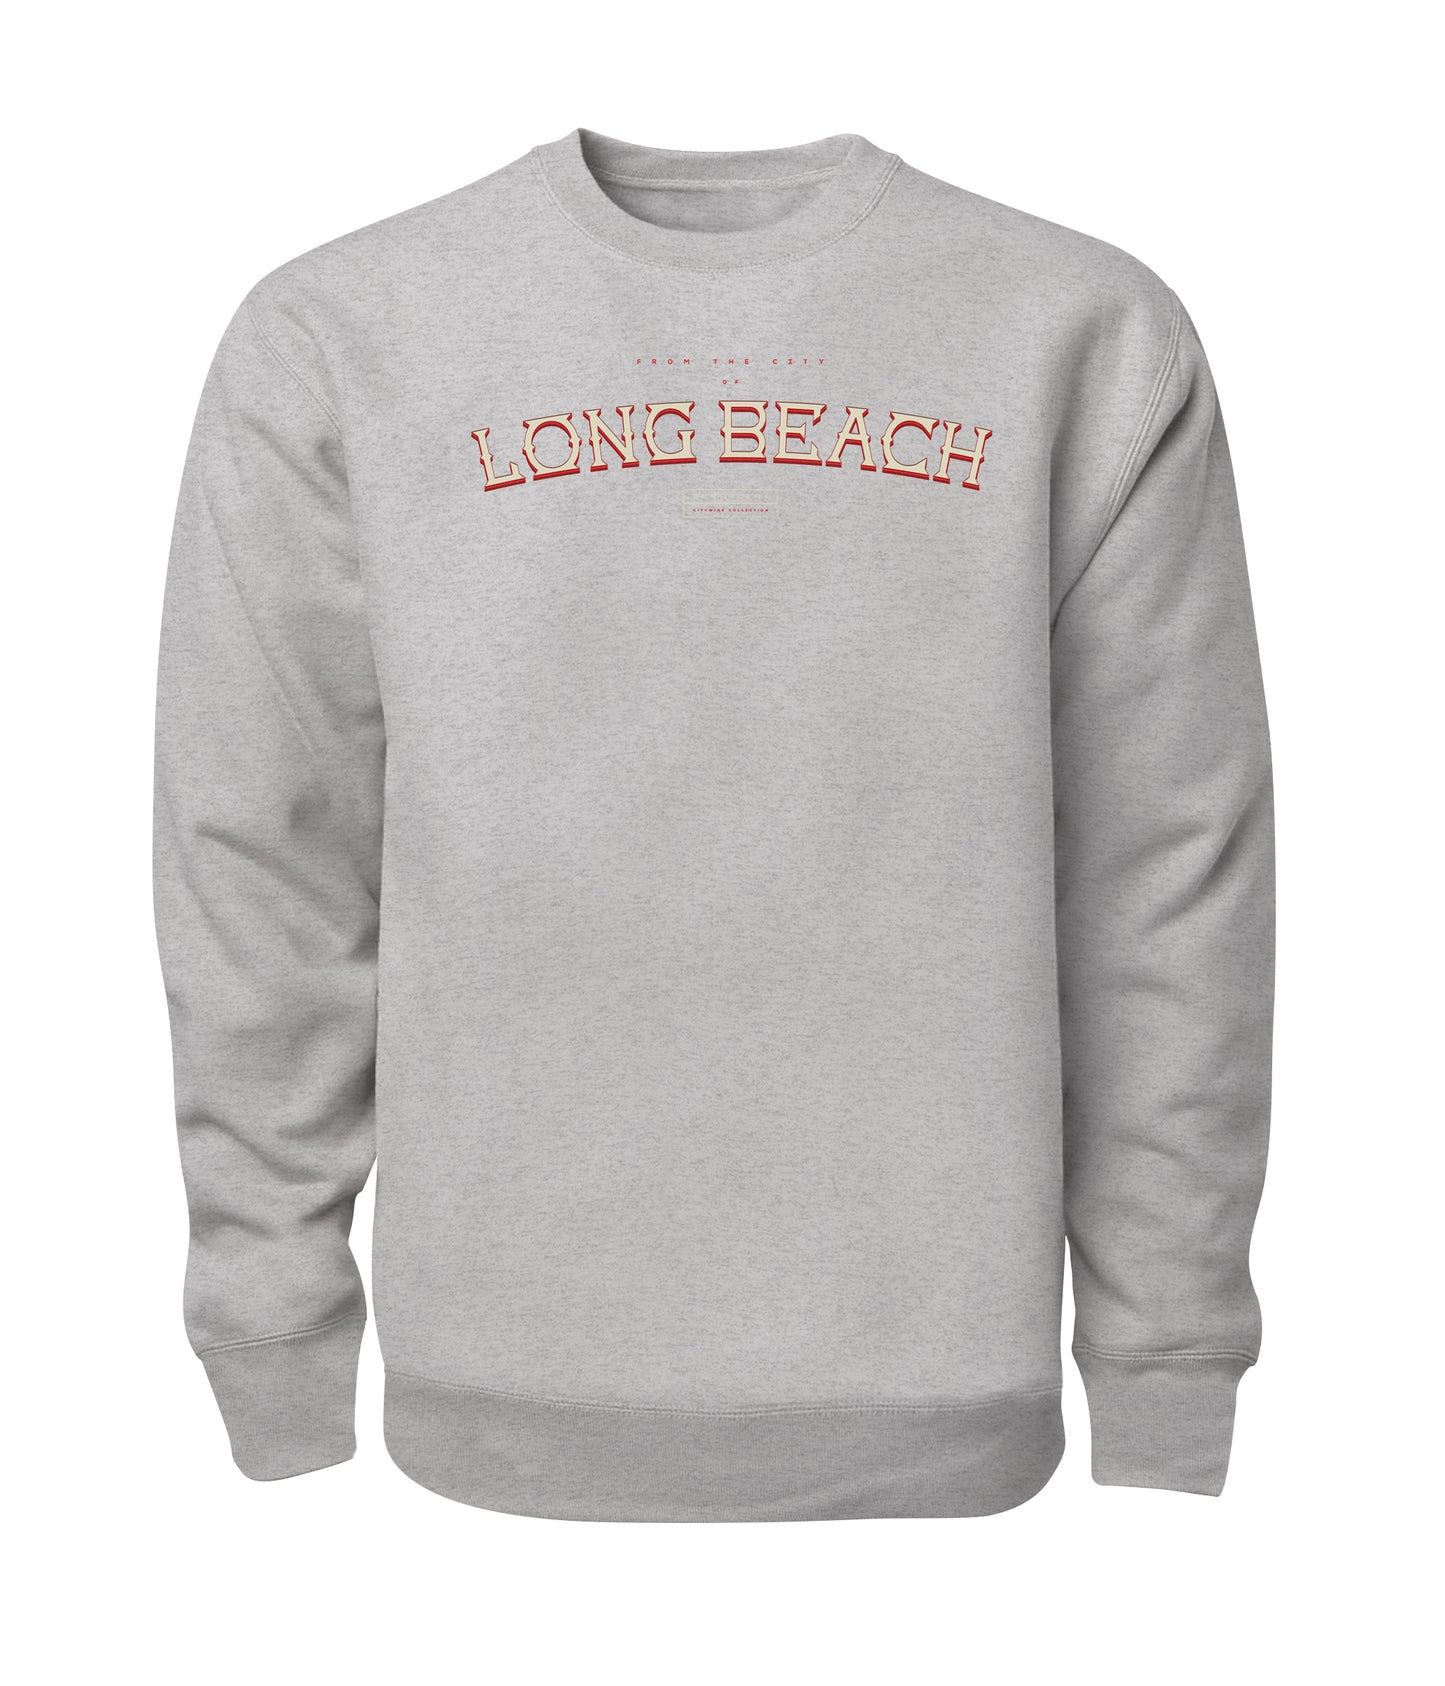 Long Beach Stacked Crewneck Sweatshirt